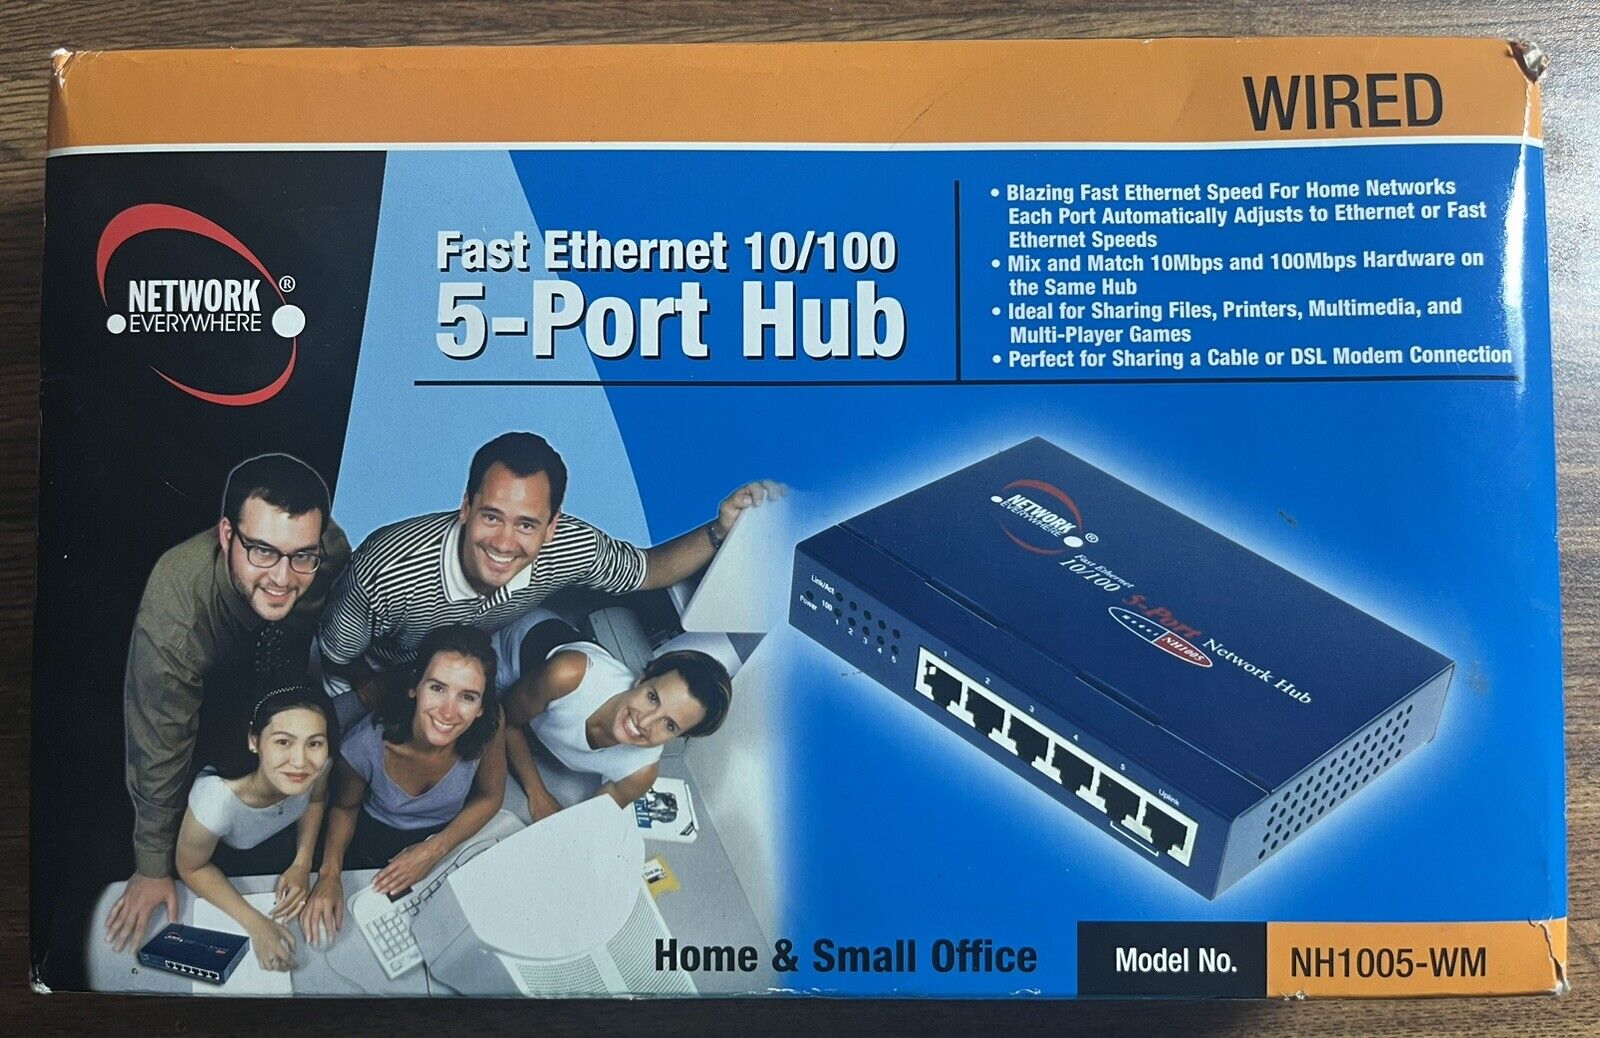 NETWORK EVERYWHERE Wired Fast Ethernet 10/100 5-Port Hub, Model NH1005-WM